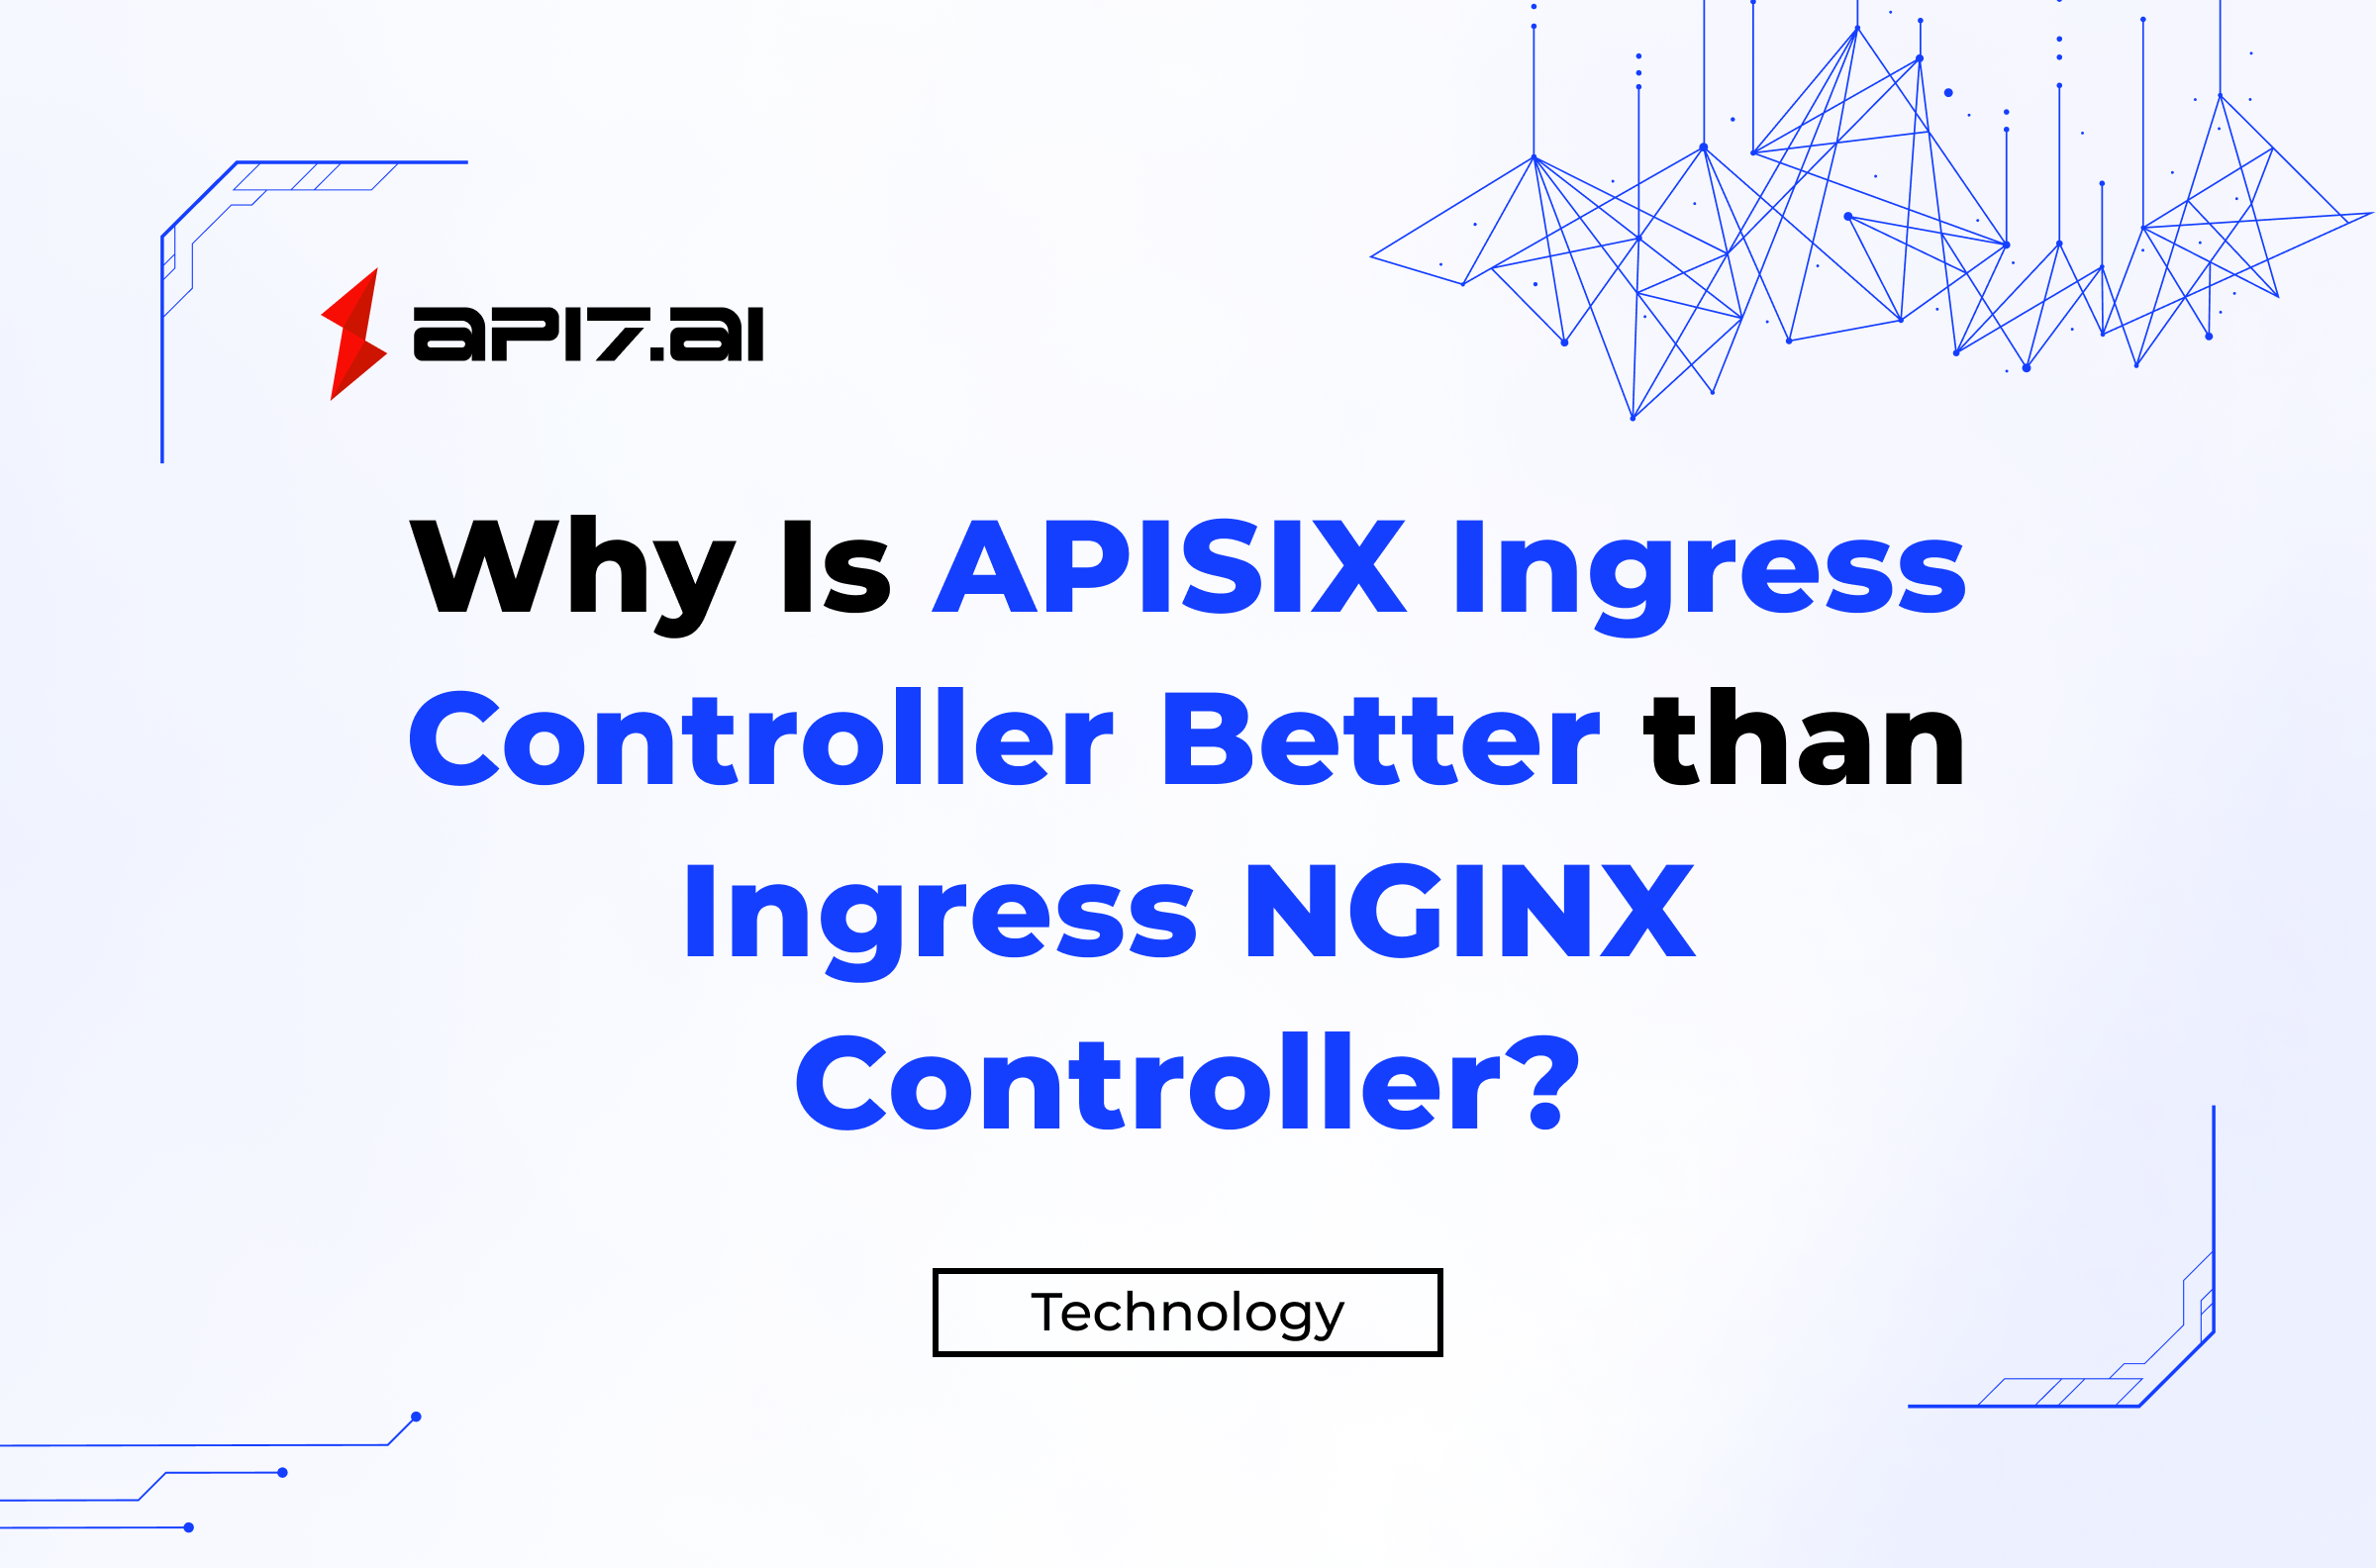 Why Is APISIX Ingress Controller Better than NGINX Ingress Controller?